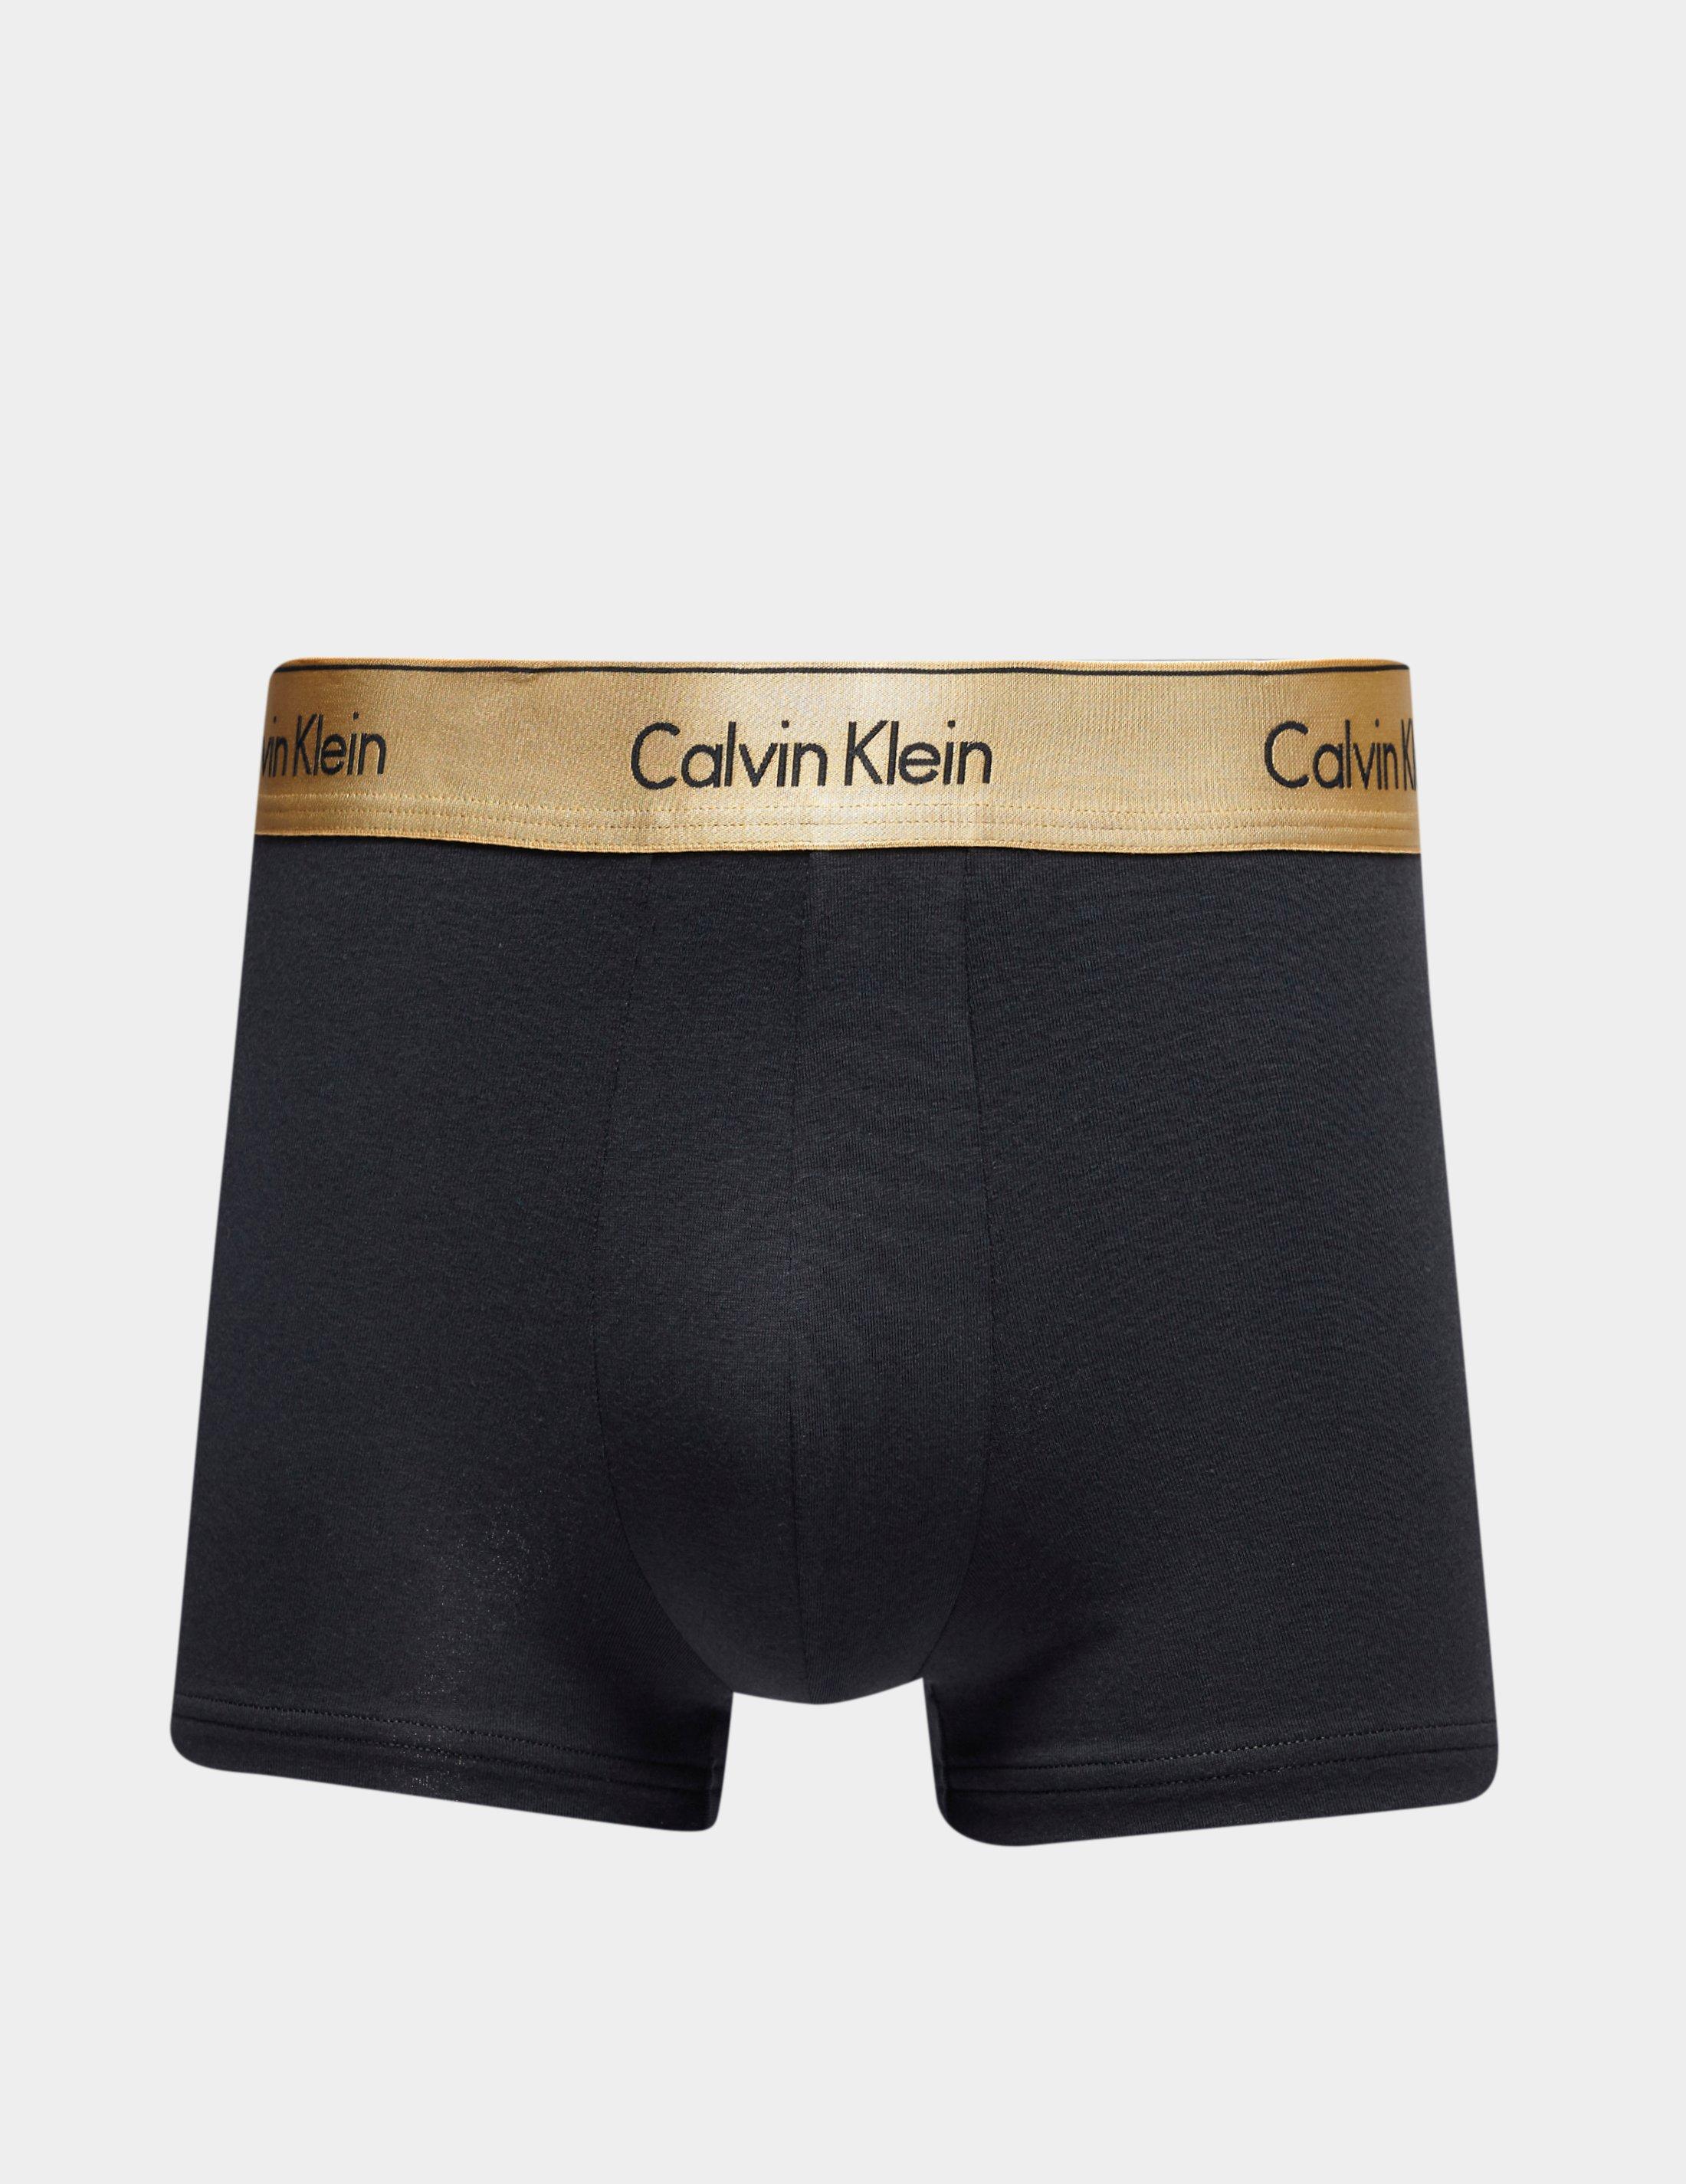 Calvin Klein Cotton Gold Waistband Boxer Shorts Black for Men | Lyst